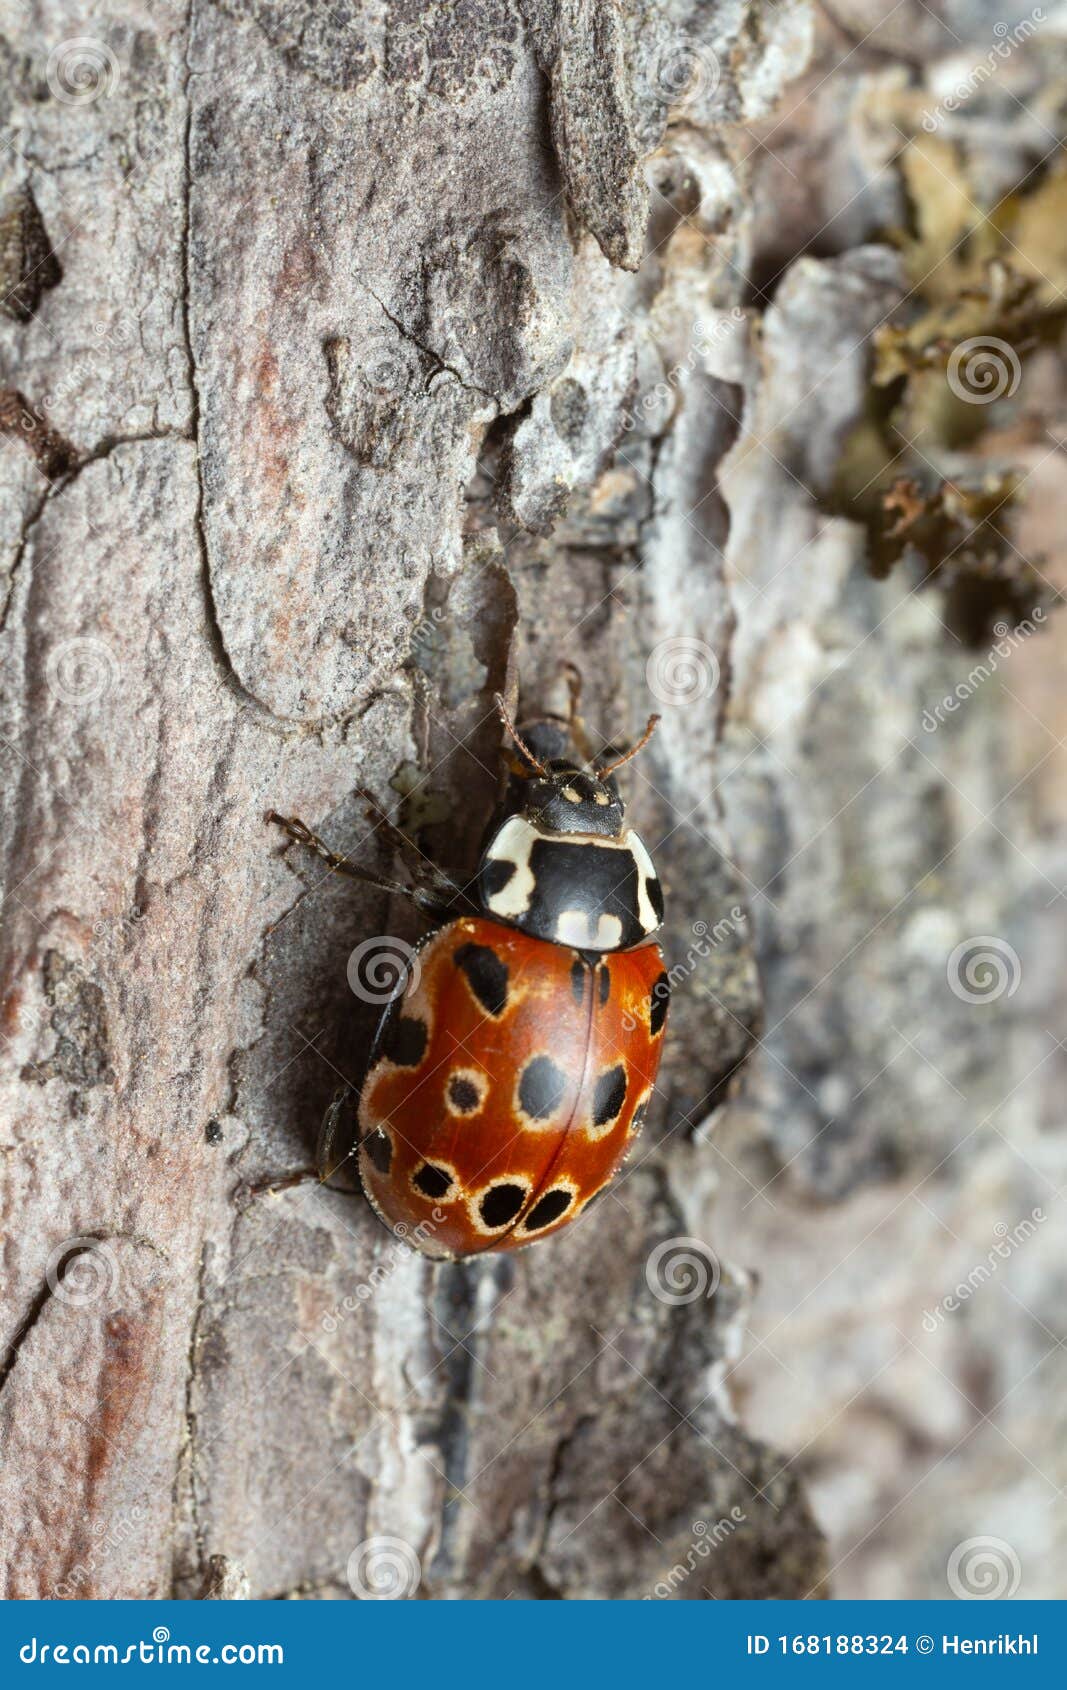 eyed ladybug, anatis ocellata on pine bark